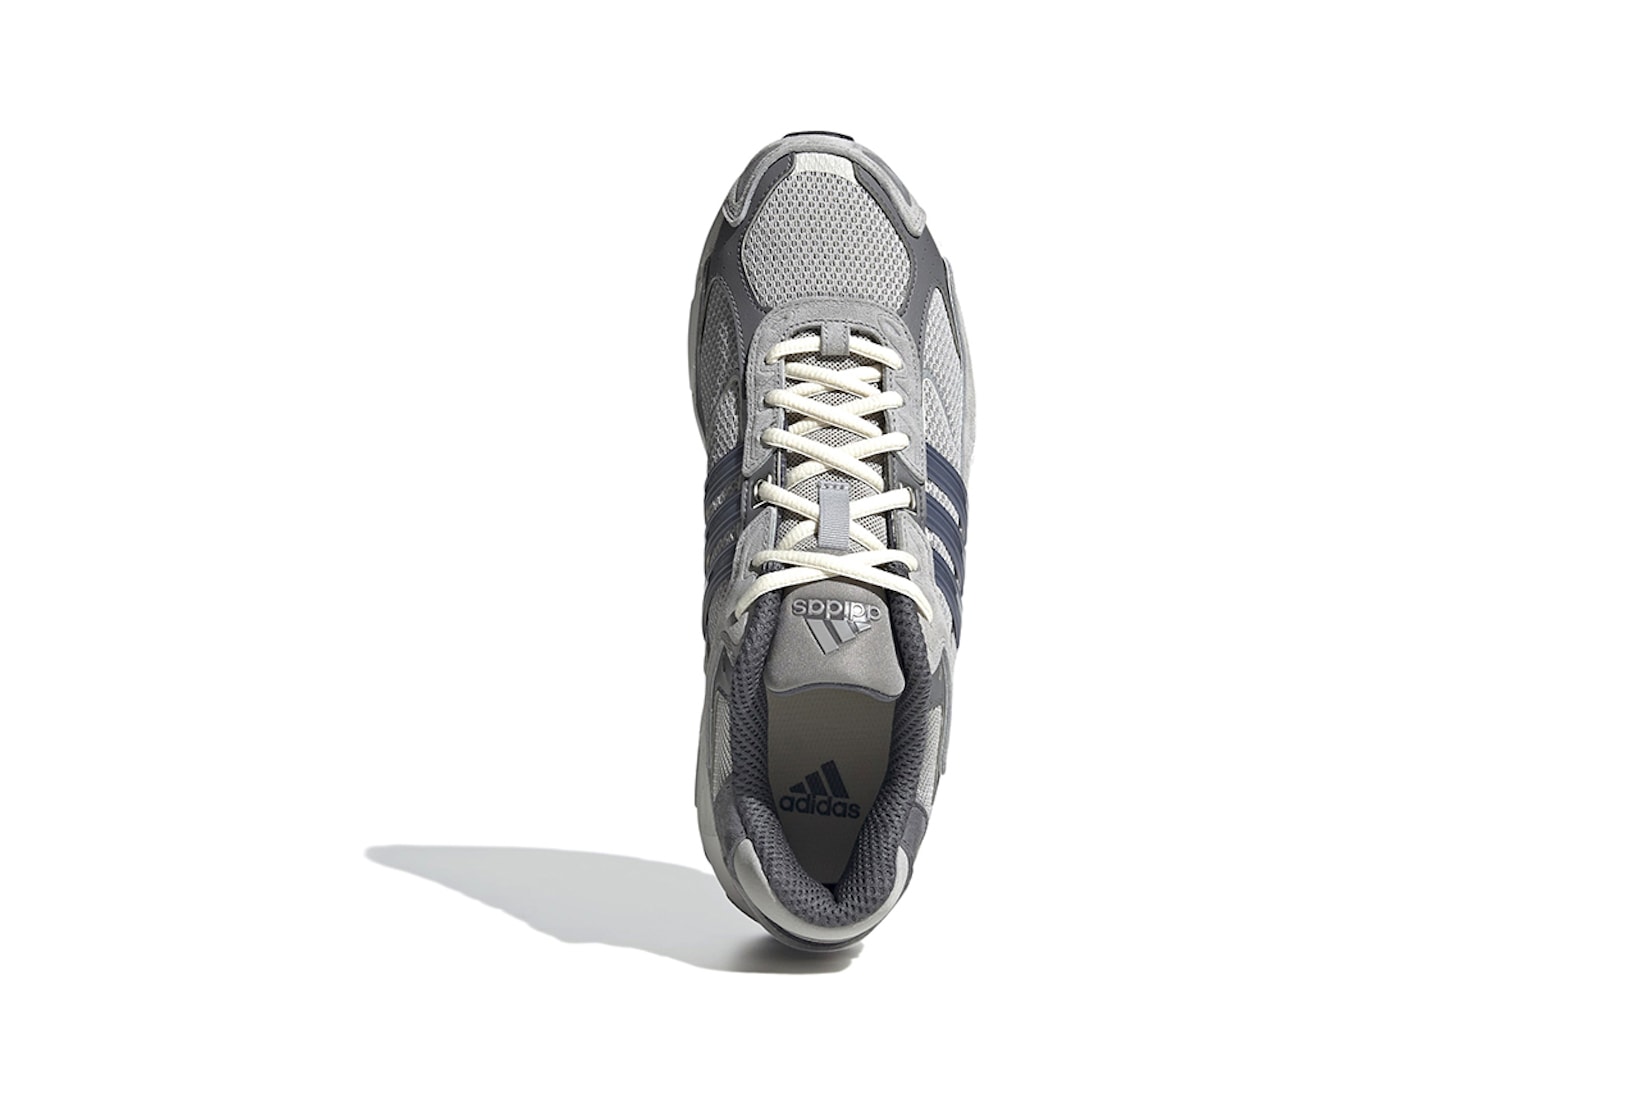 Adidas Originals Response CL Metal Grey White Footwear Sneakers Shoes Kicks Top